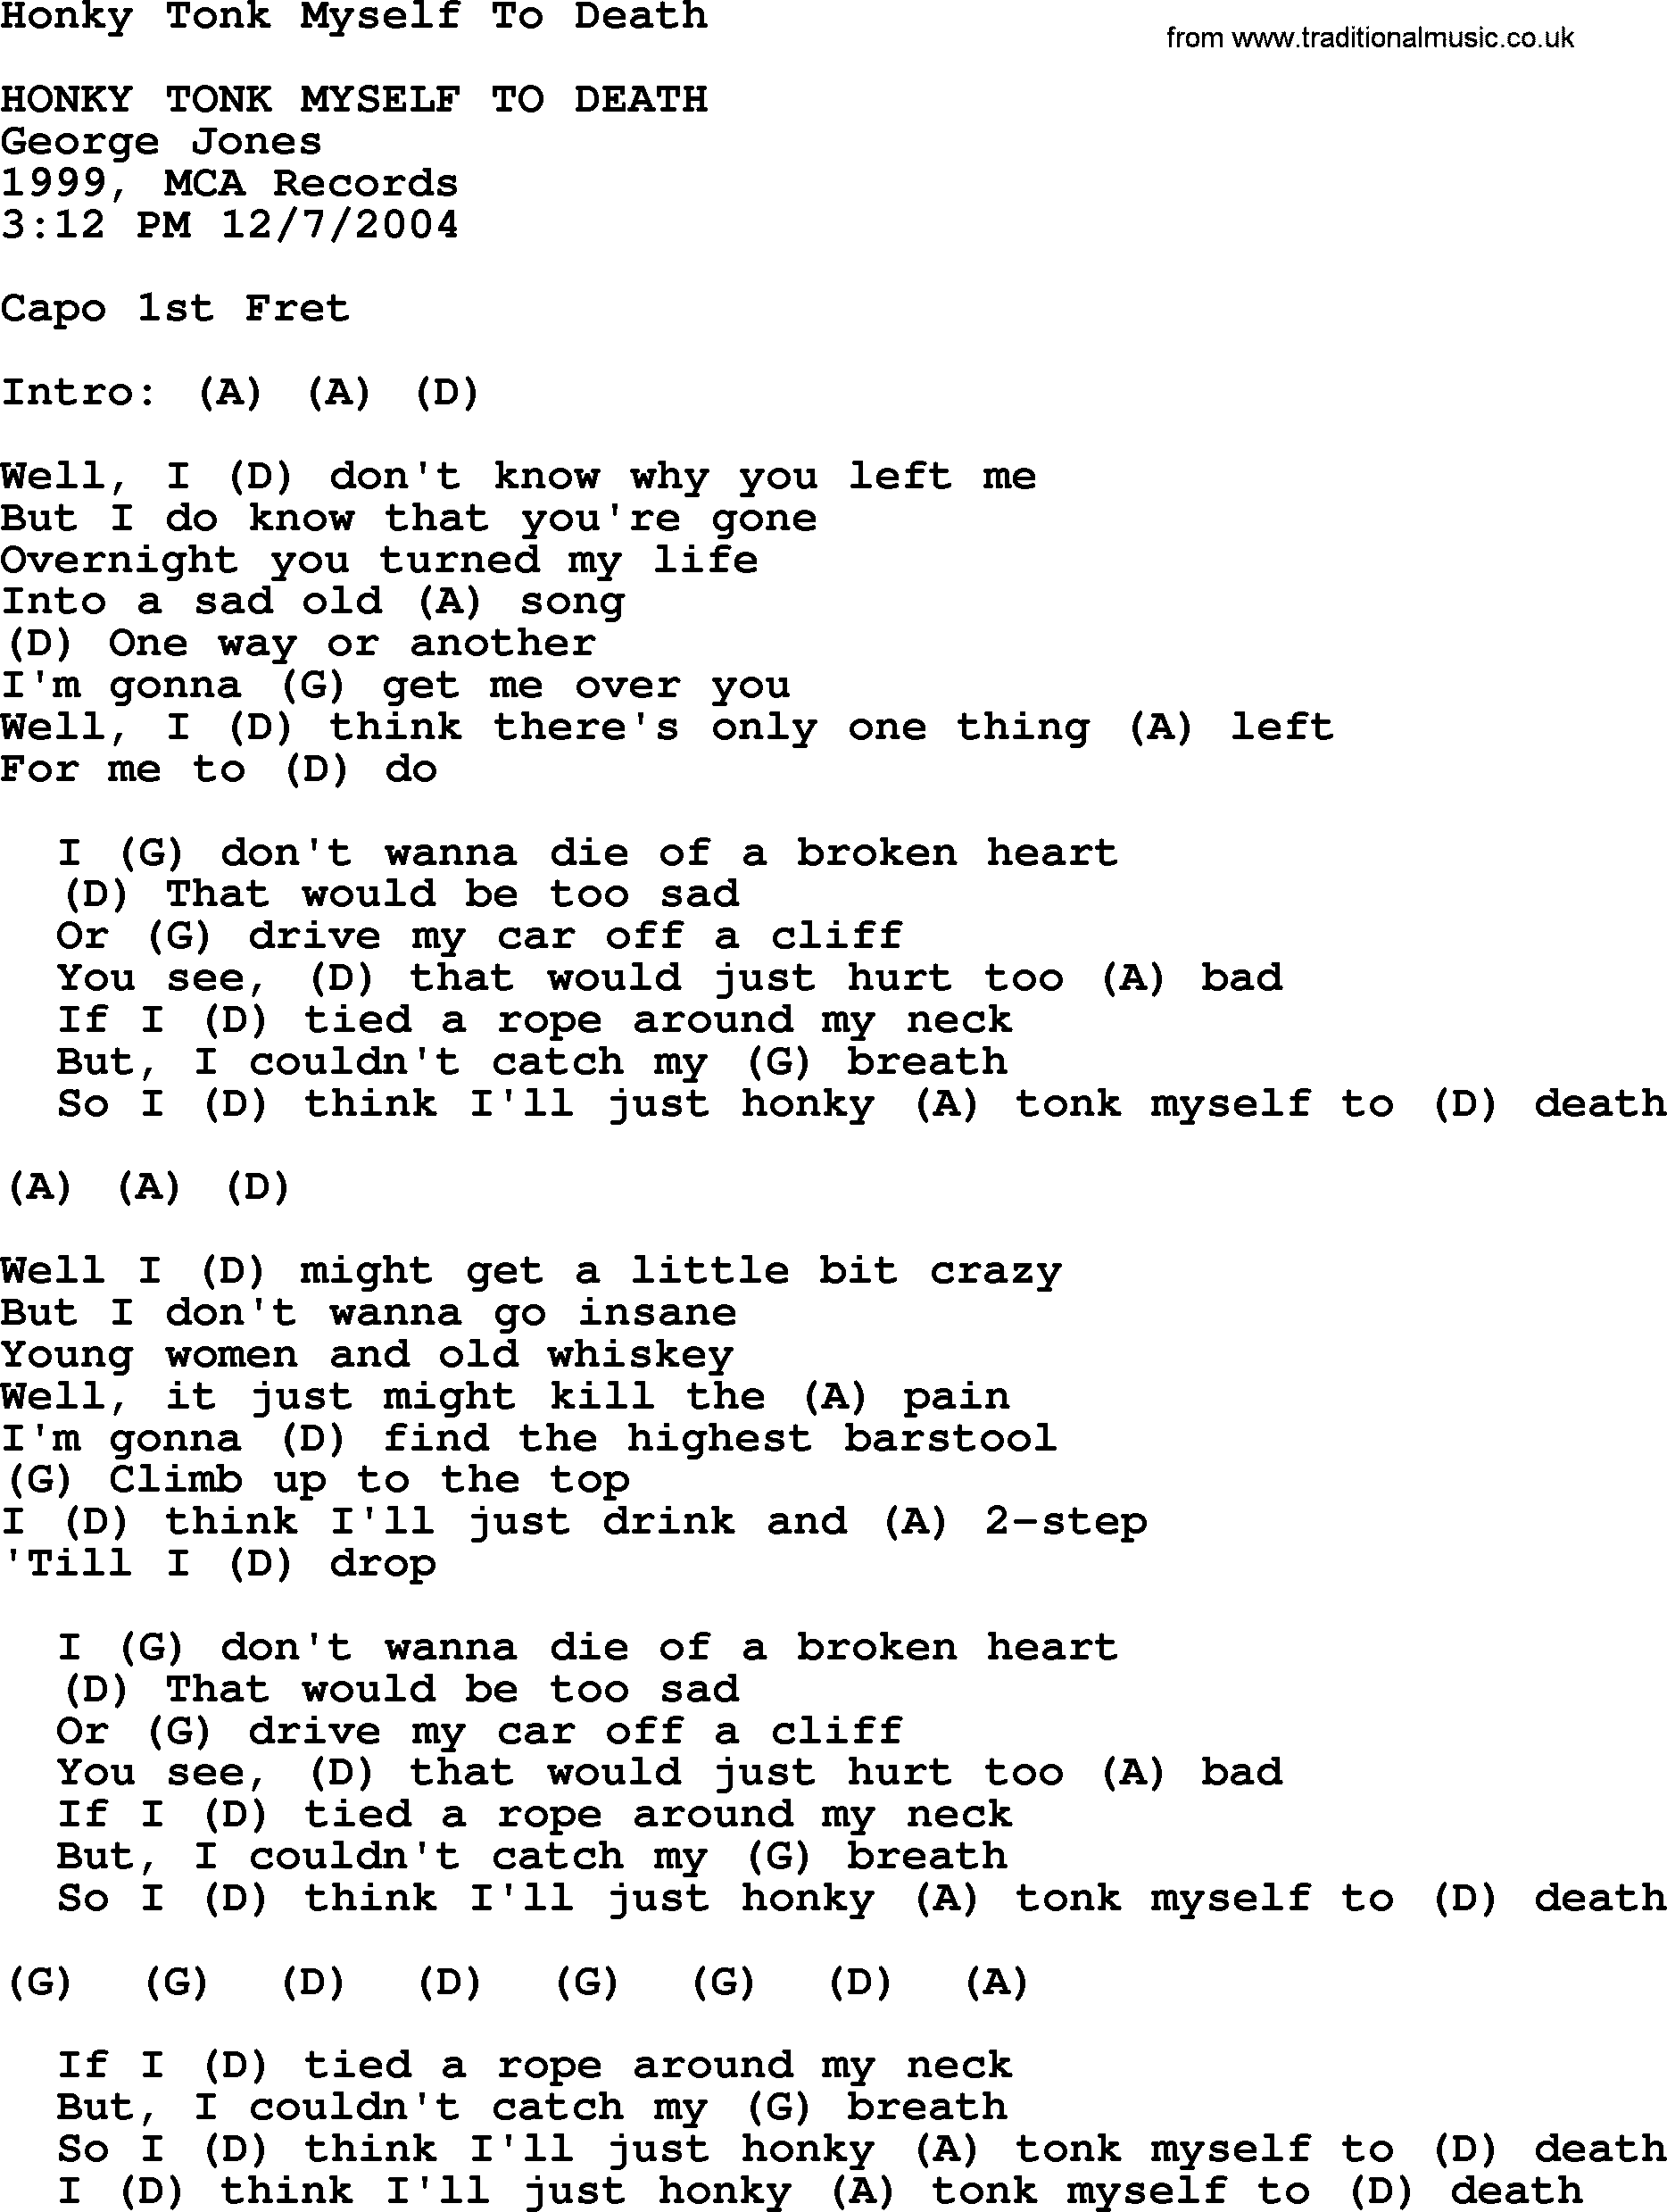 George Jones song: Honky Tonk Myself To Death, lyrics and chords